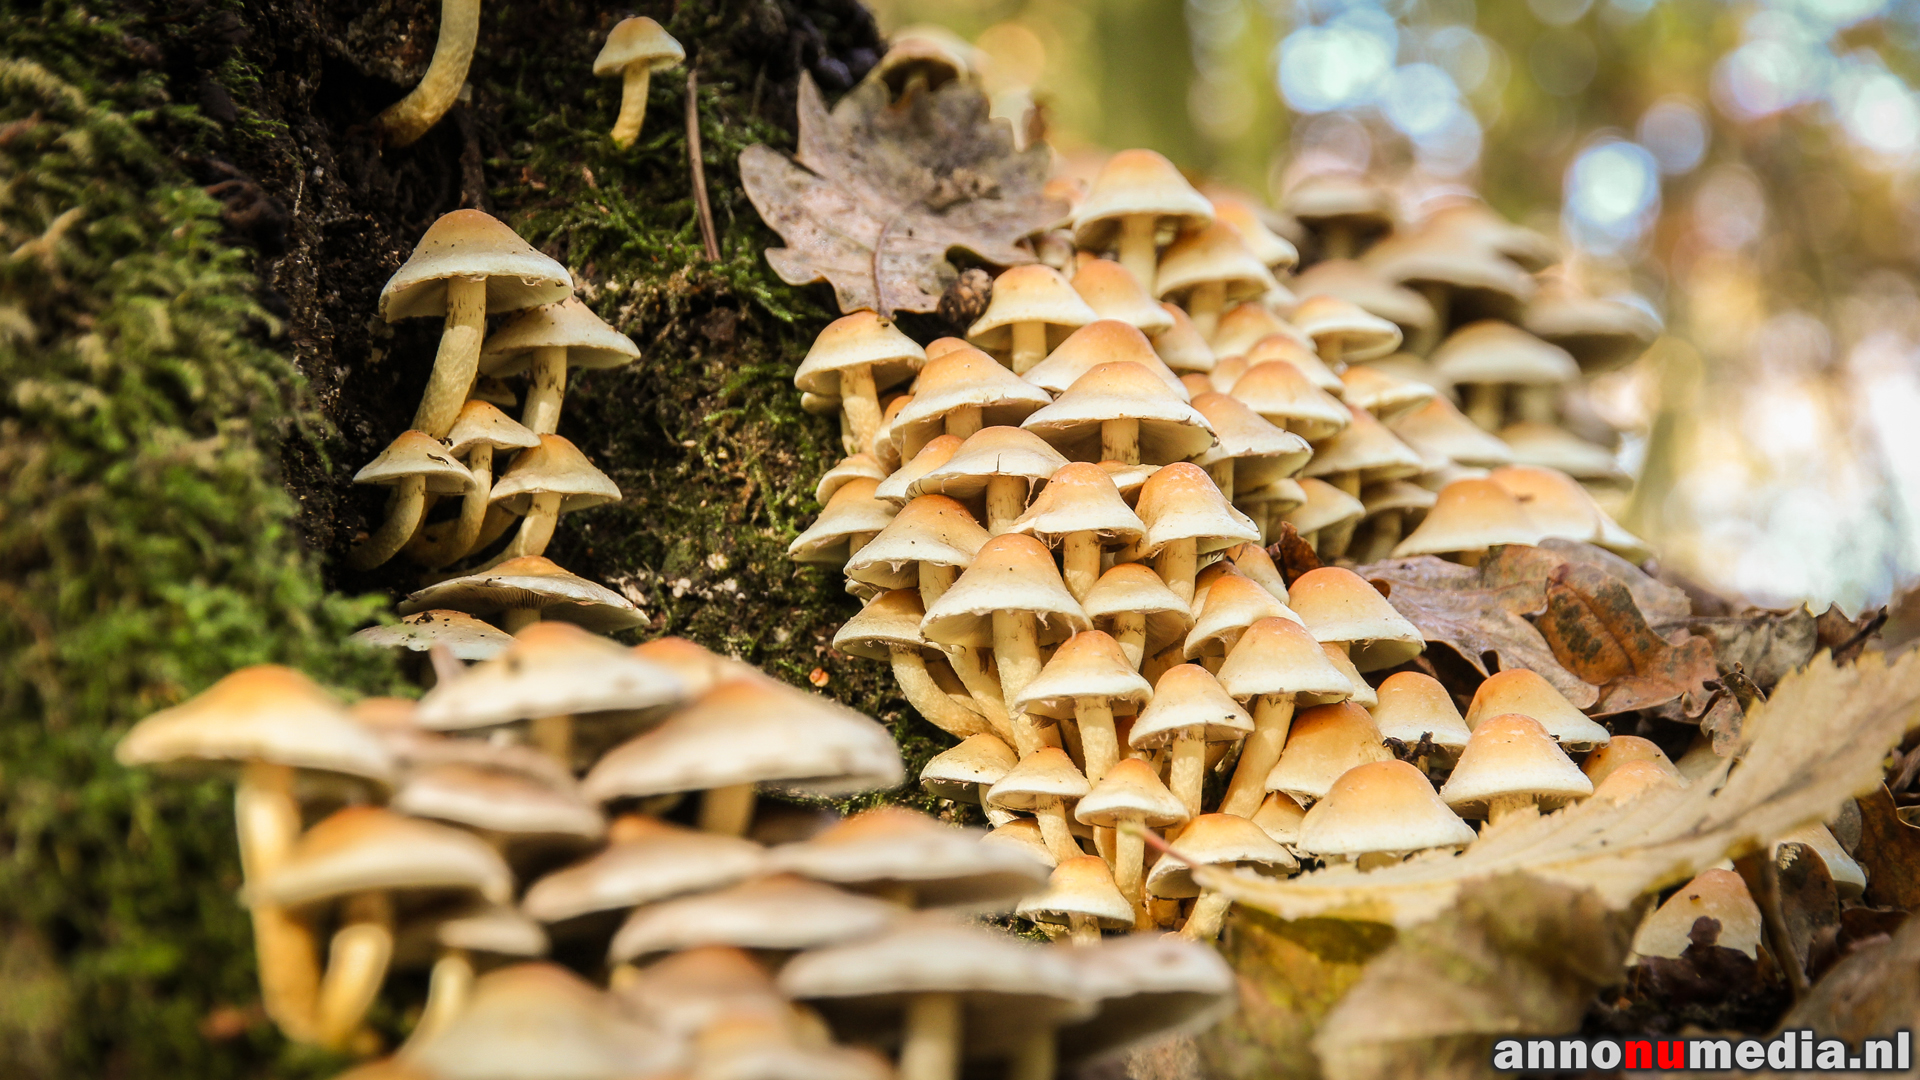 An audience of mushrooms